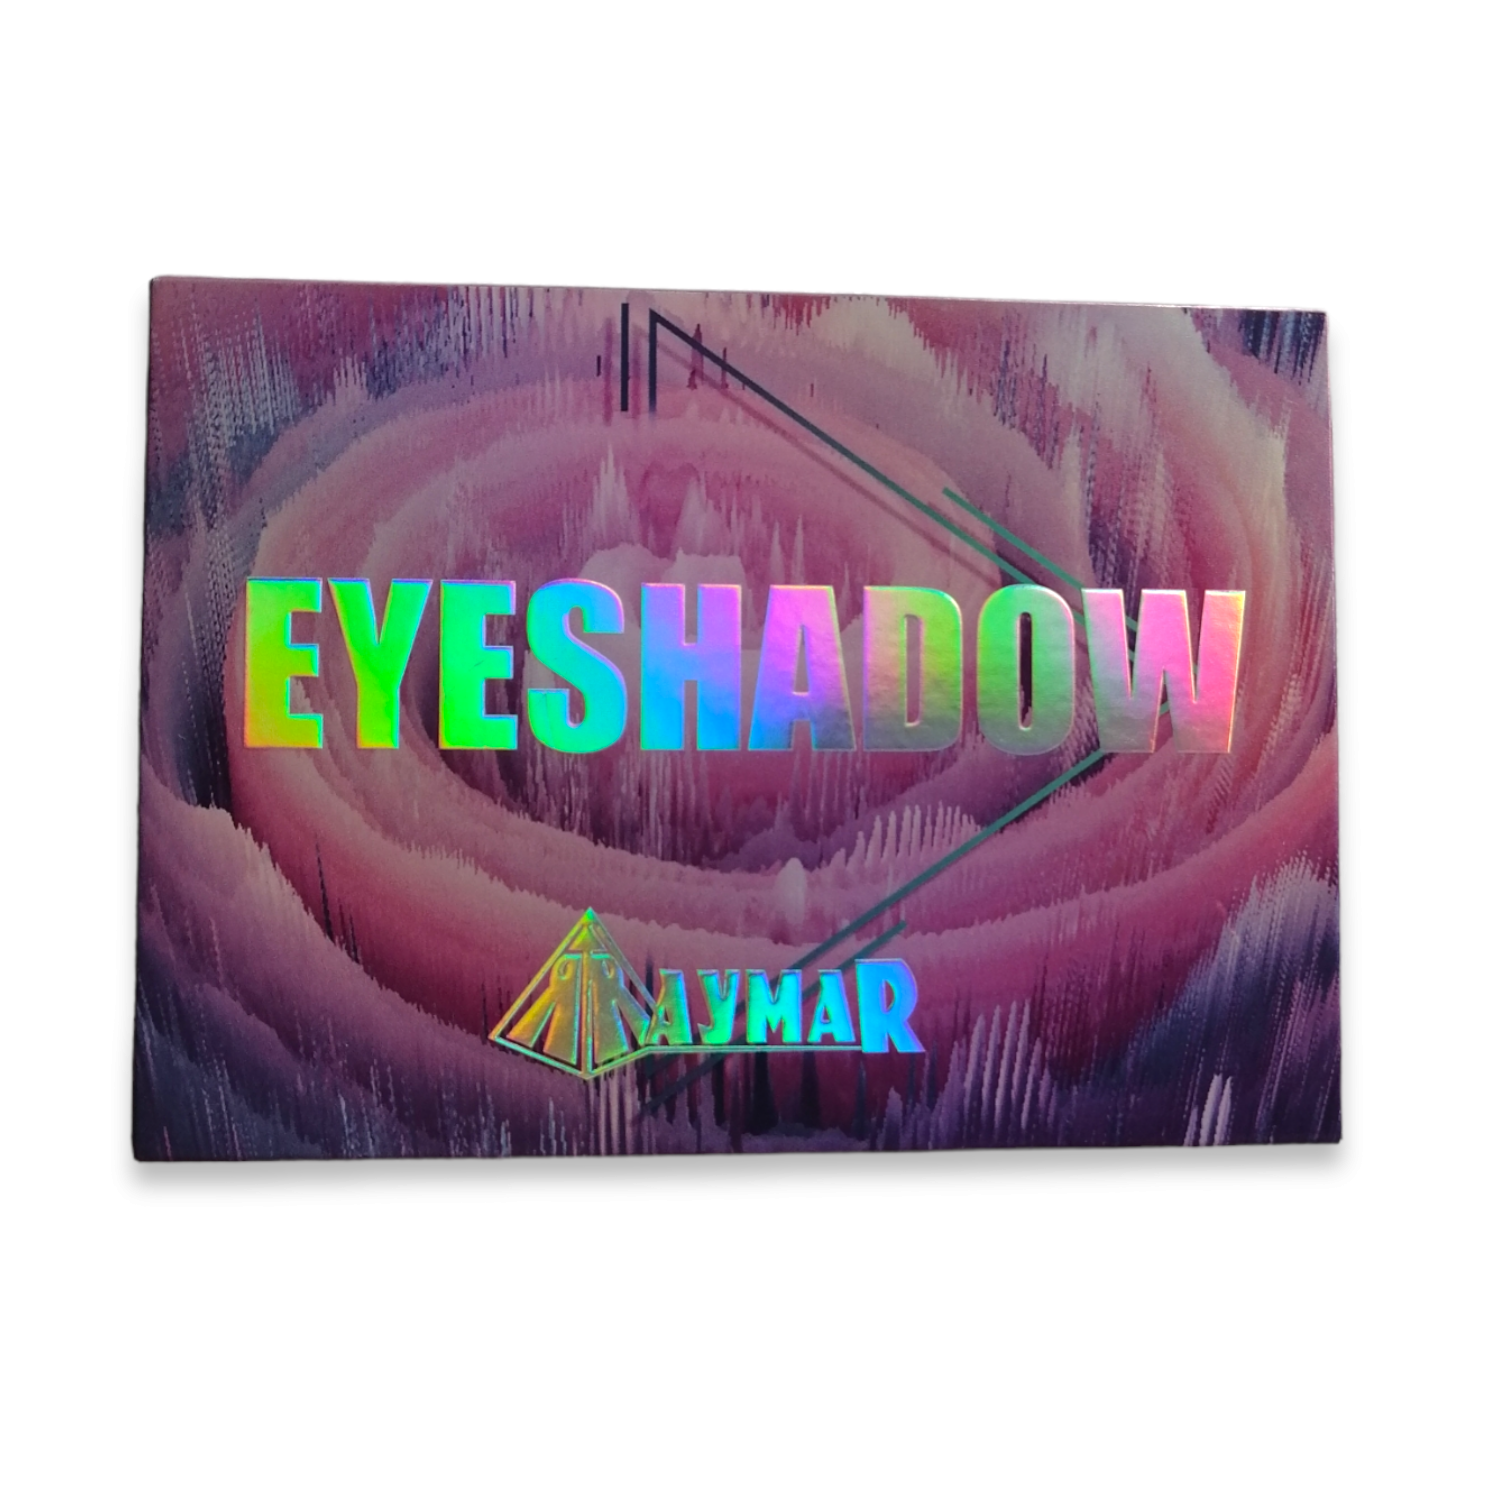 Sombras Eyeshadow Raymar